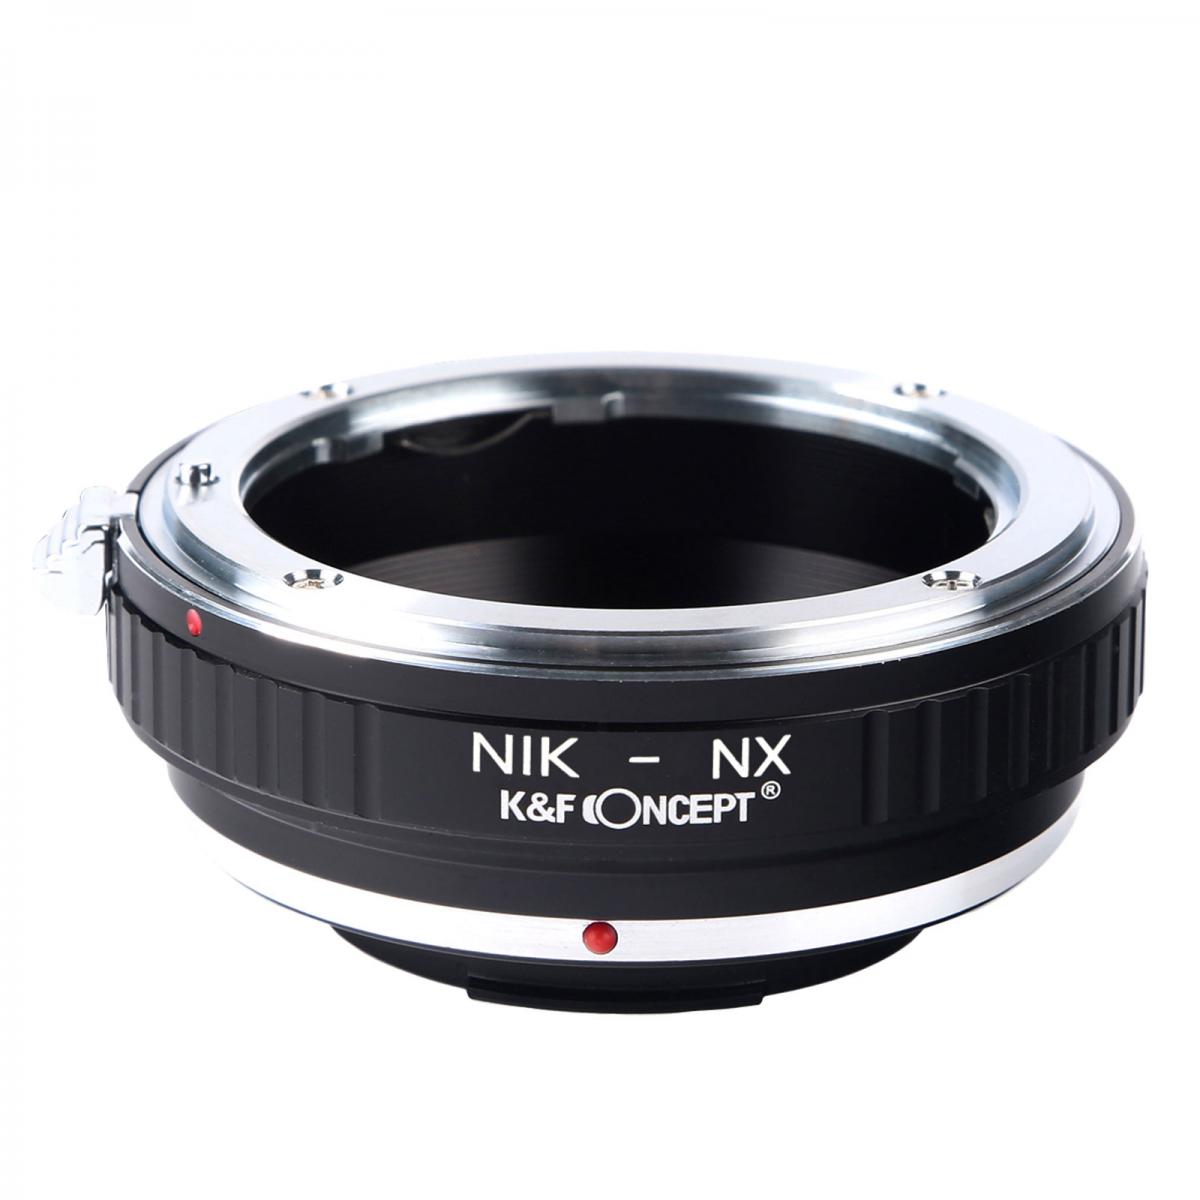 K&F Concept Nikon F Lenses to Samsung NX Lens Mount Adapter K&F Concept M11251 Lens Adapter